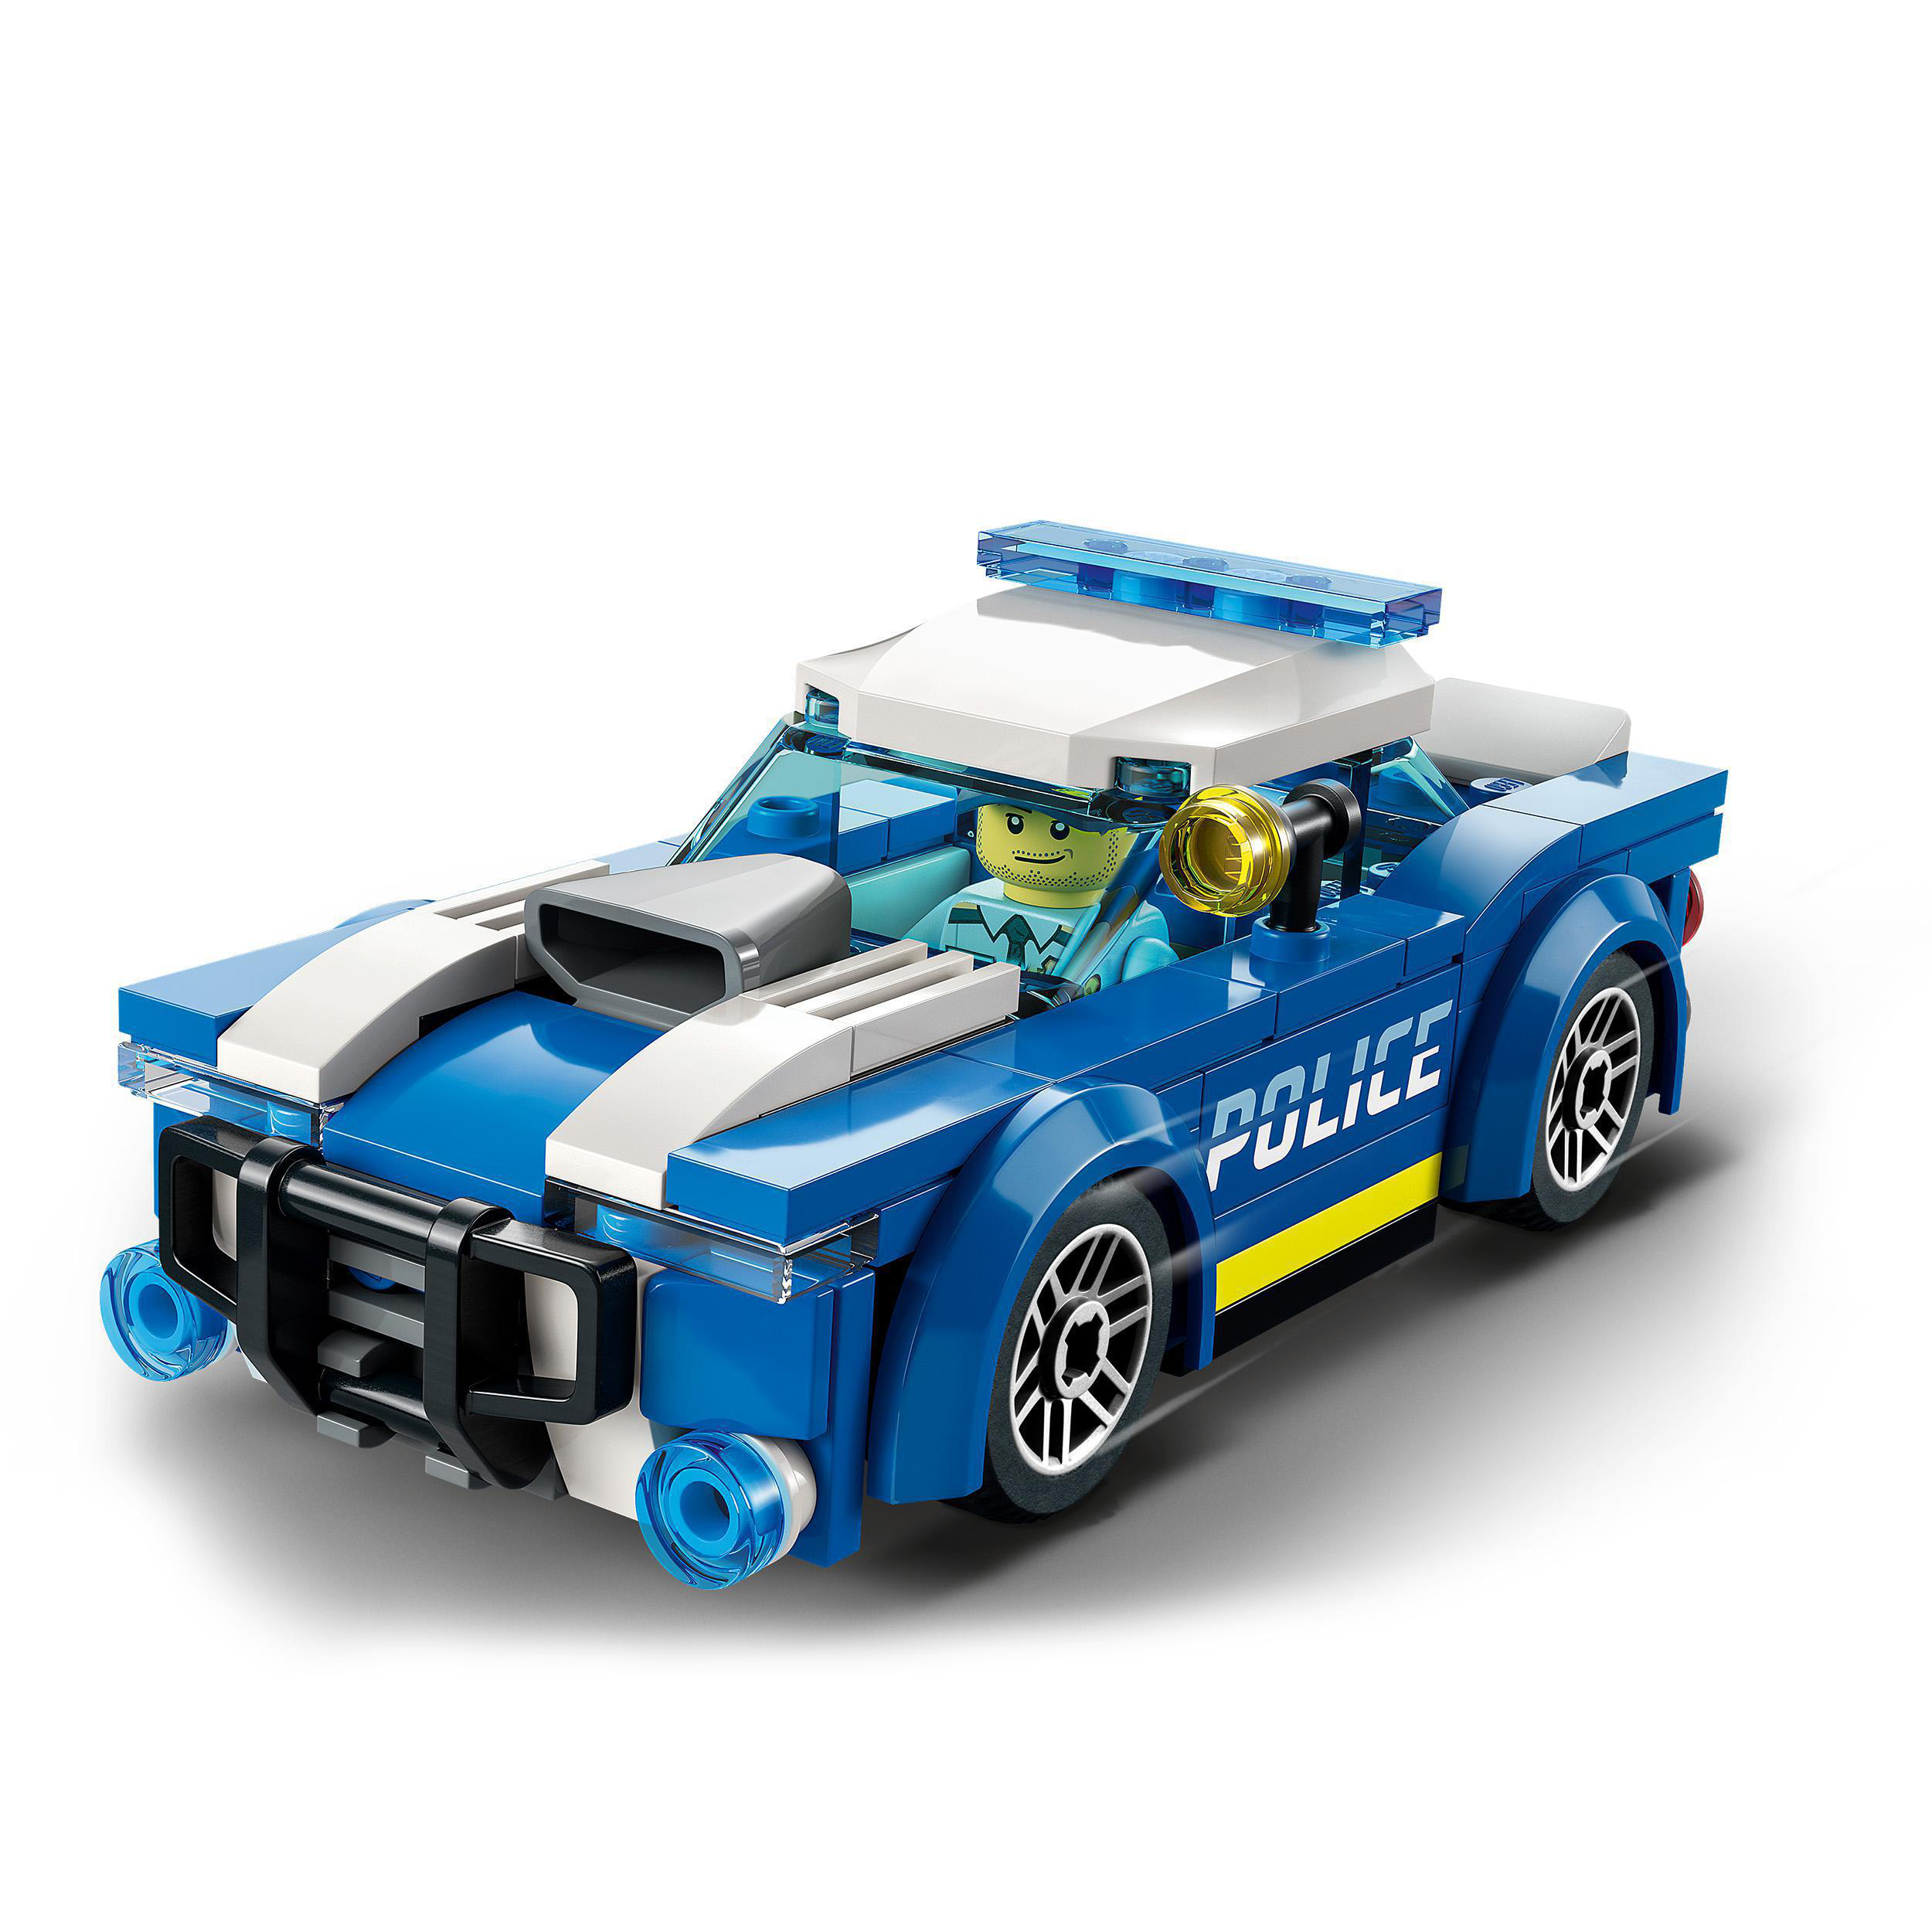 LEGO Mehrfarbig Polizeiauto 60312 Bausatz, City